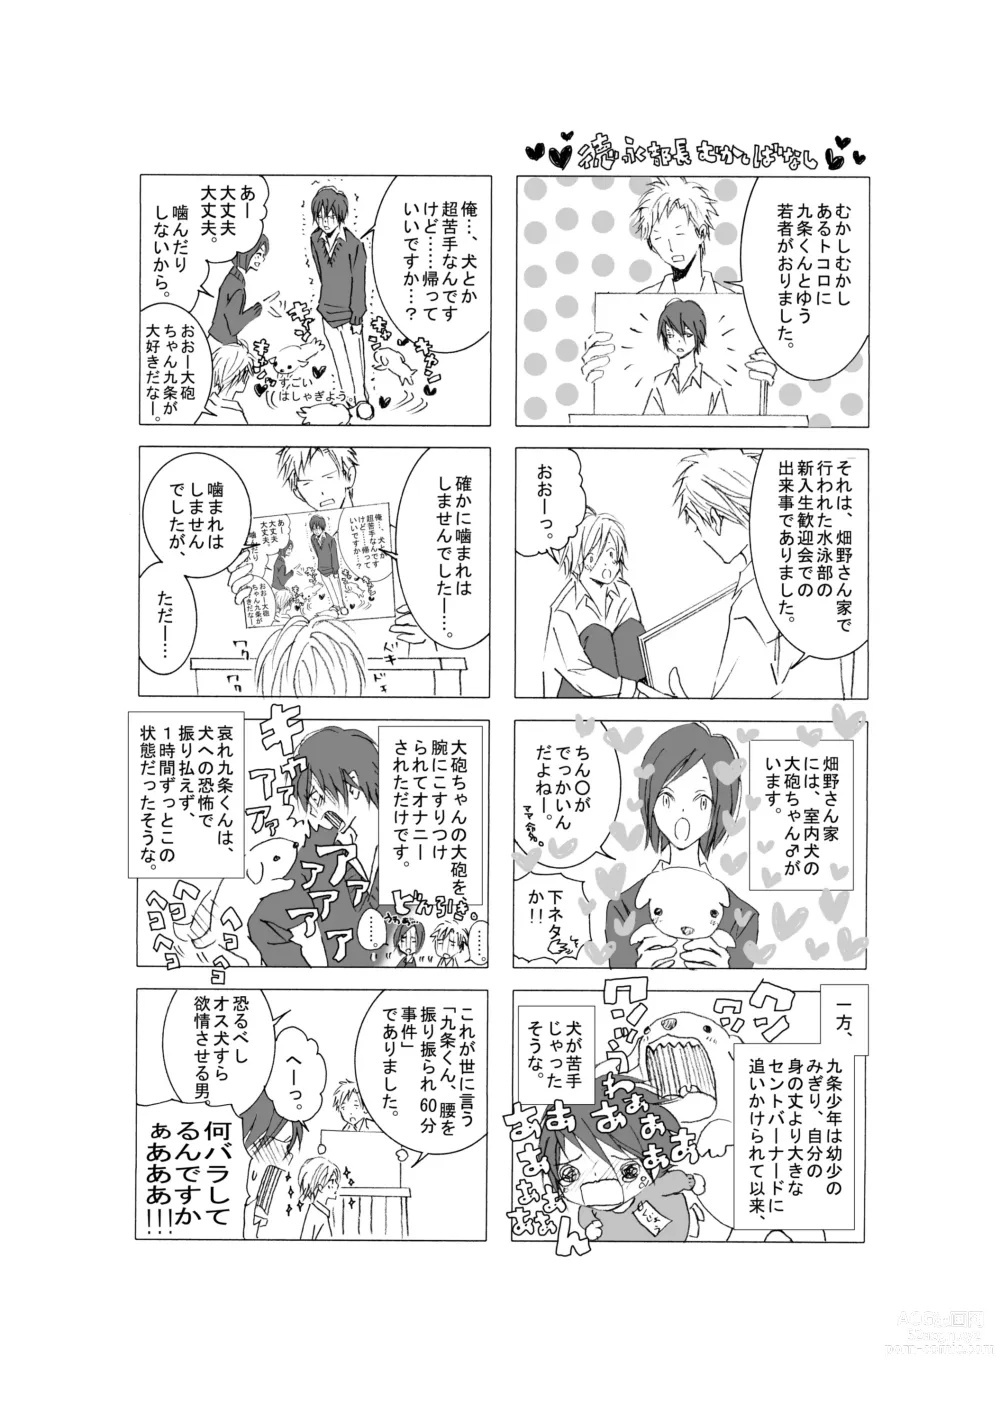 Page 16 of doujinshi Torotoro na Futari